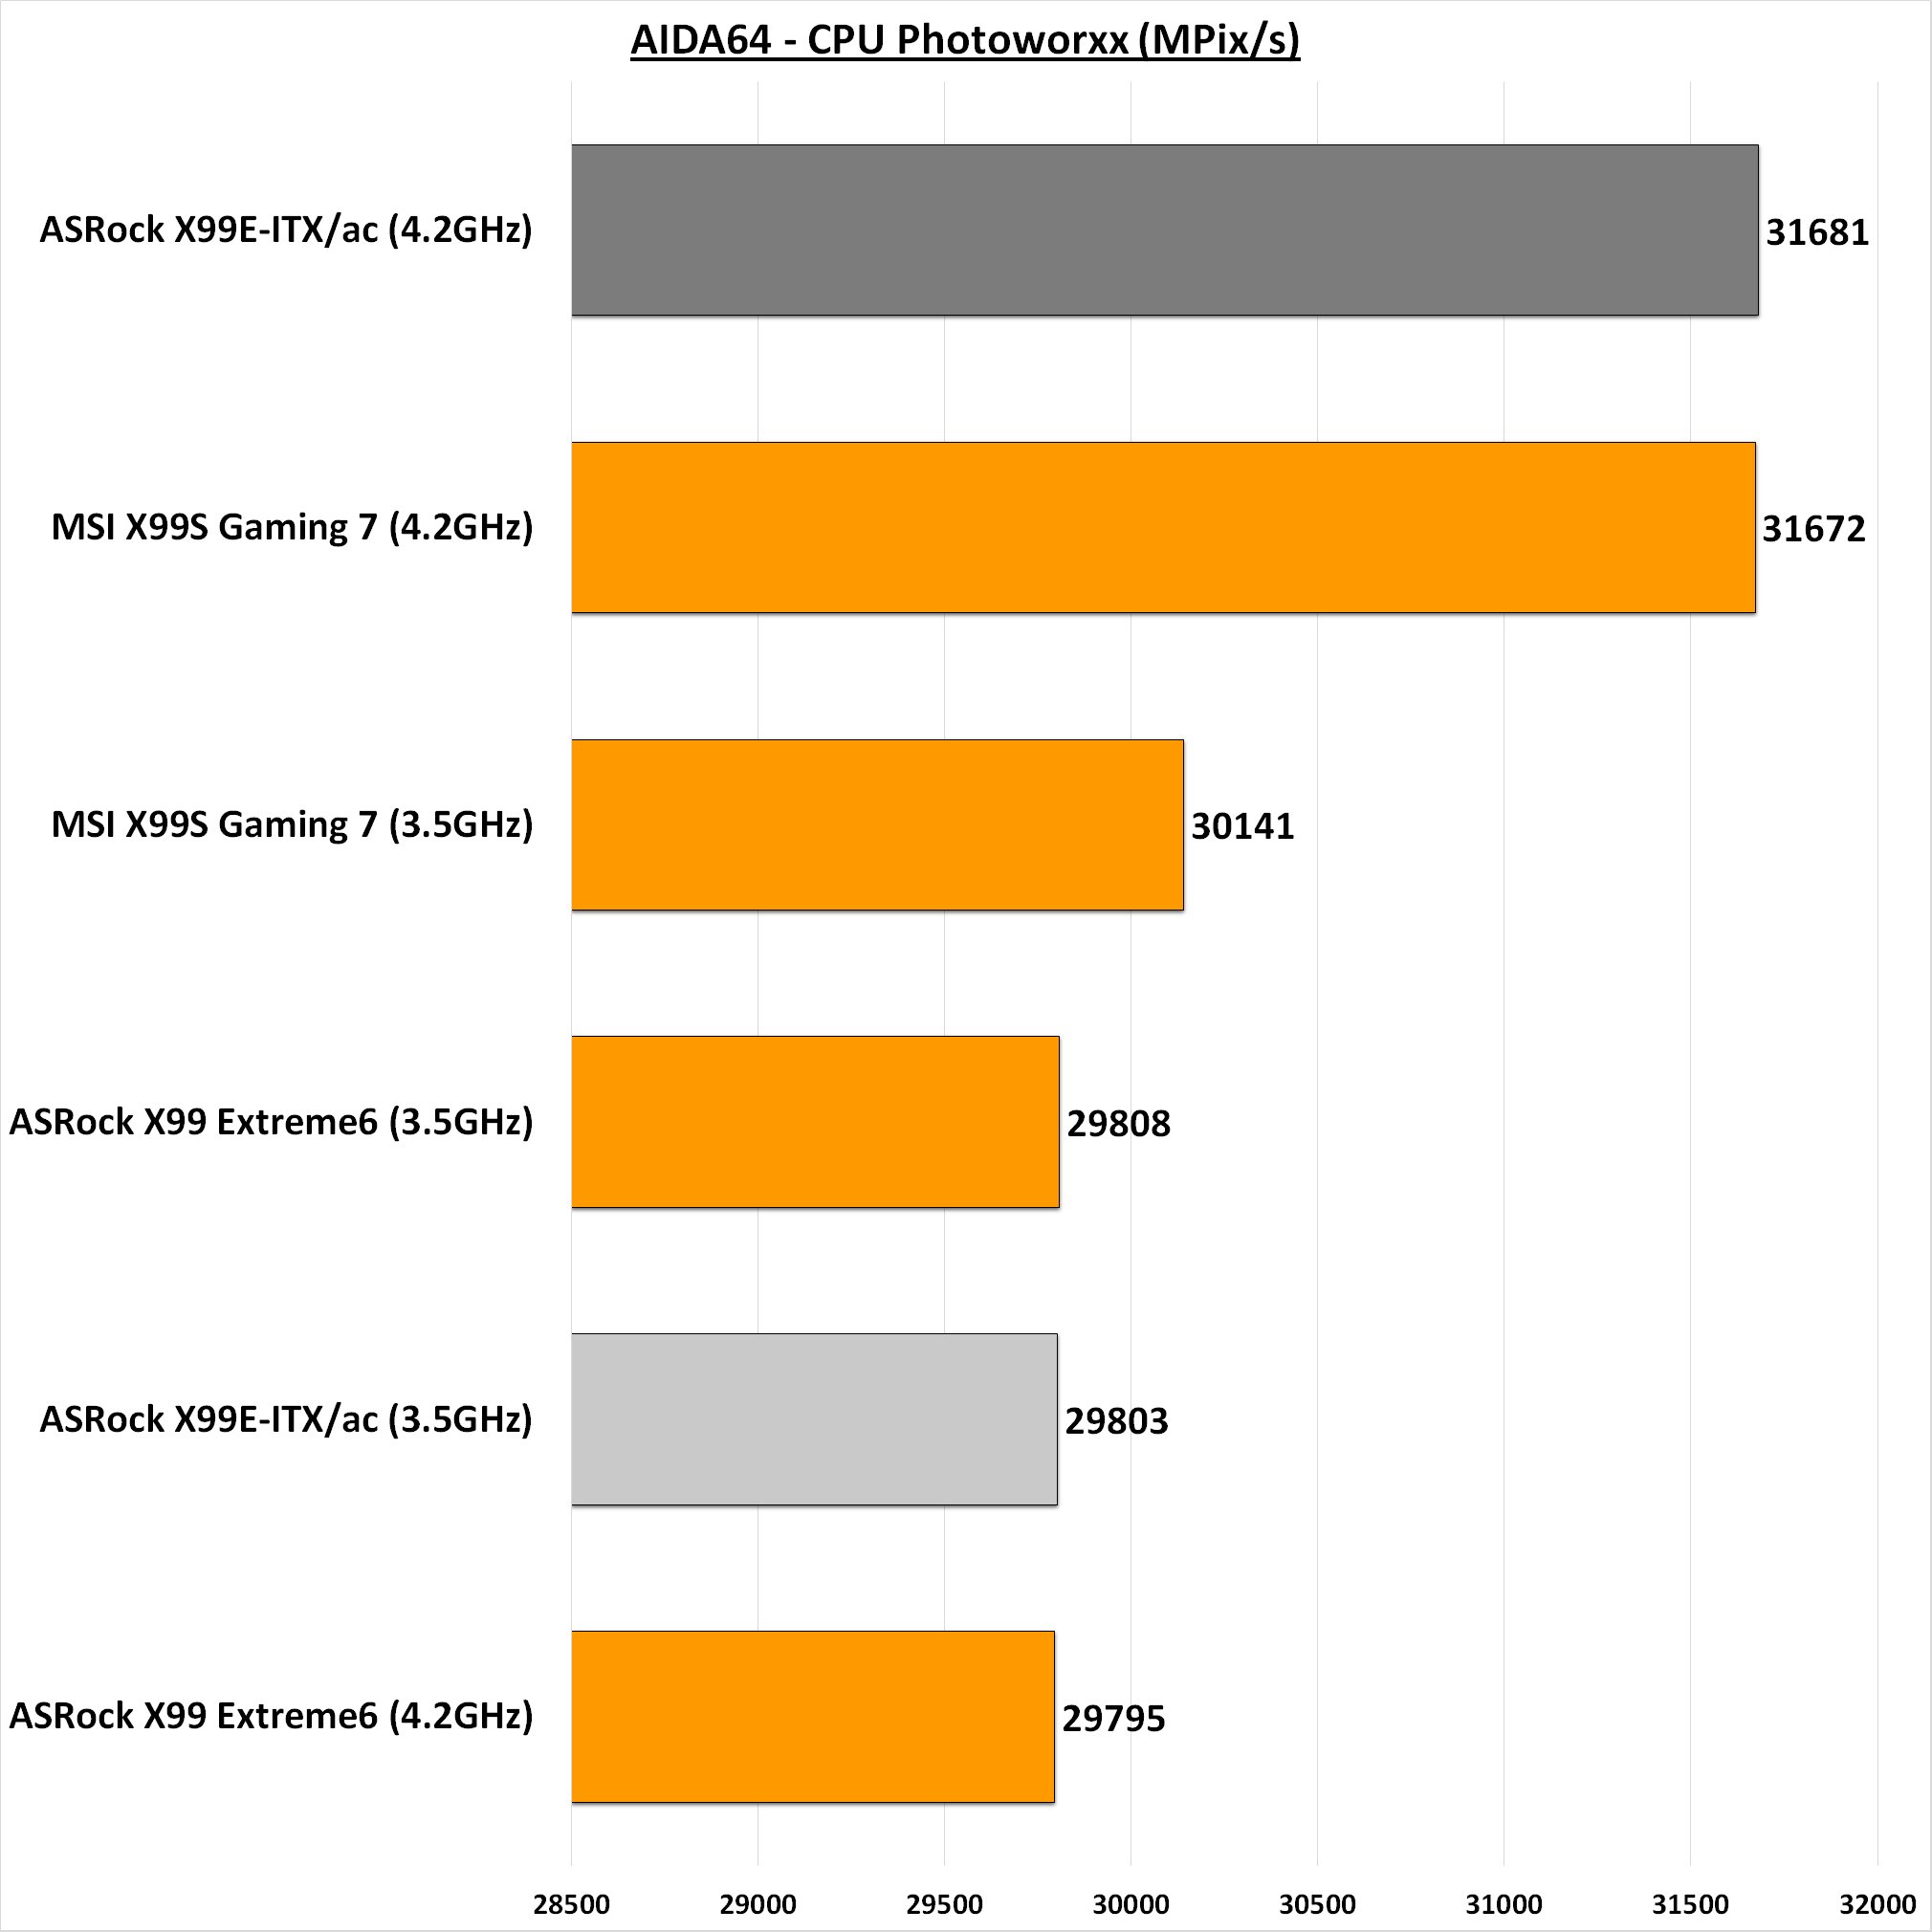 ASRock X99E-ITX/ac Mini-ITX Motherboard Review 24